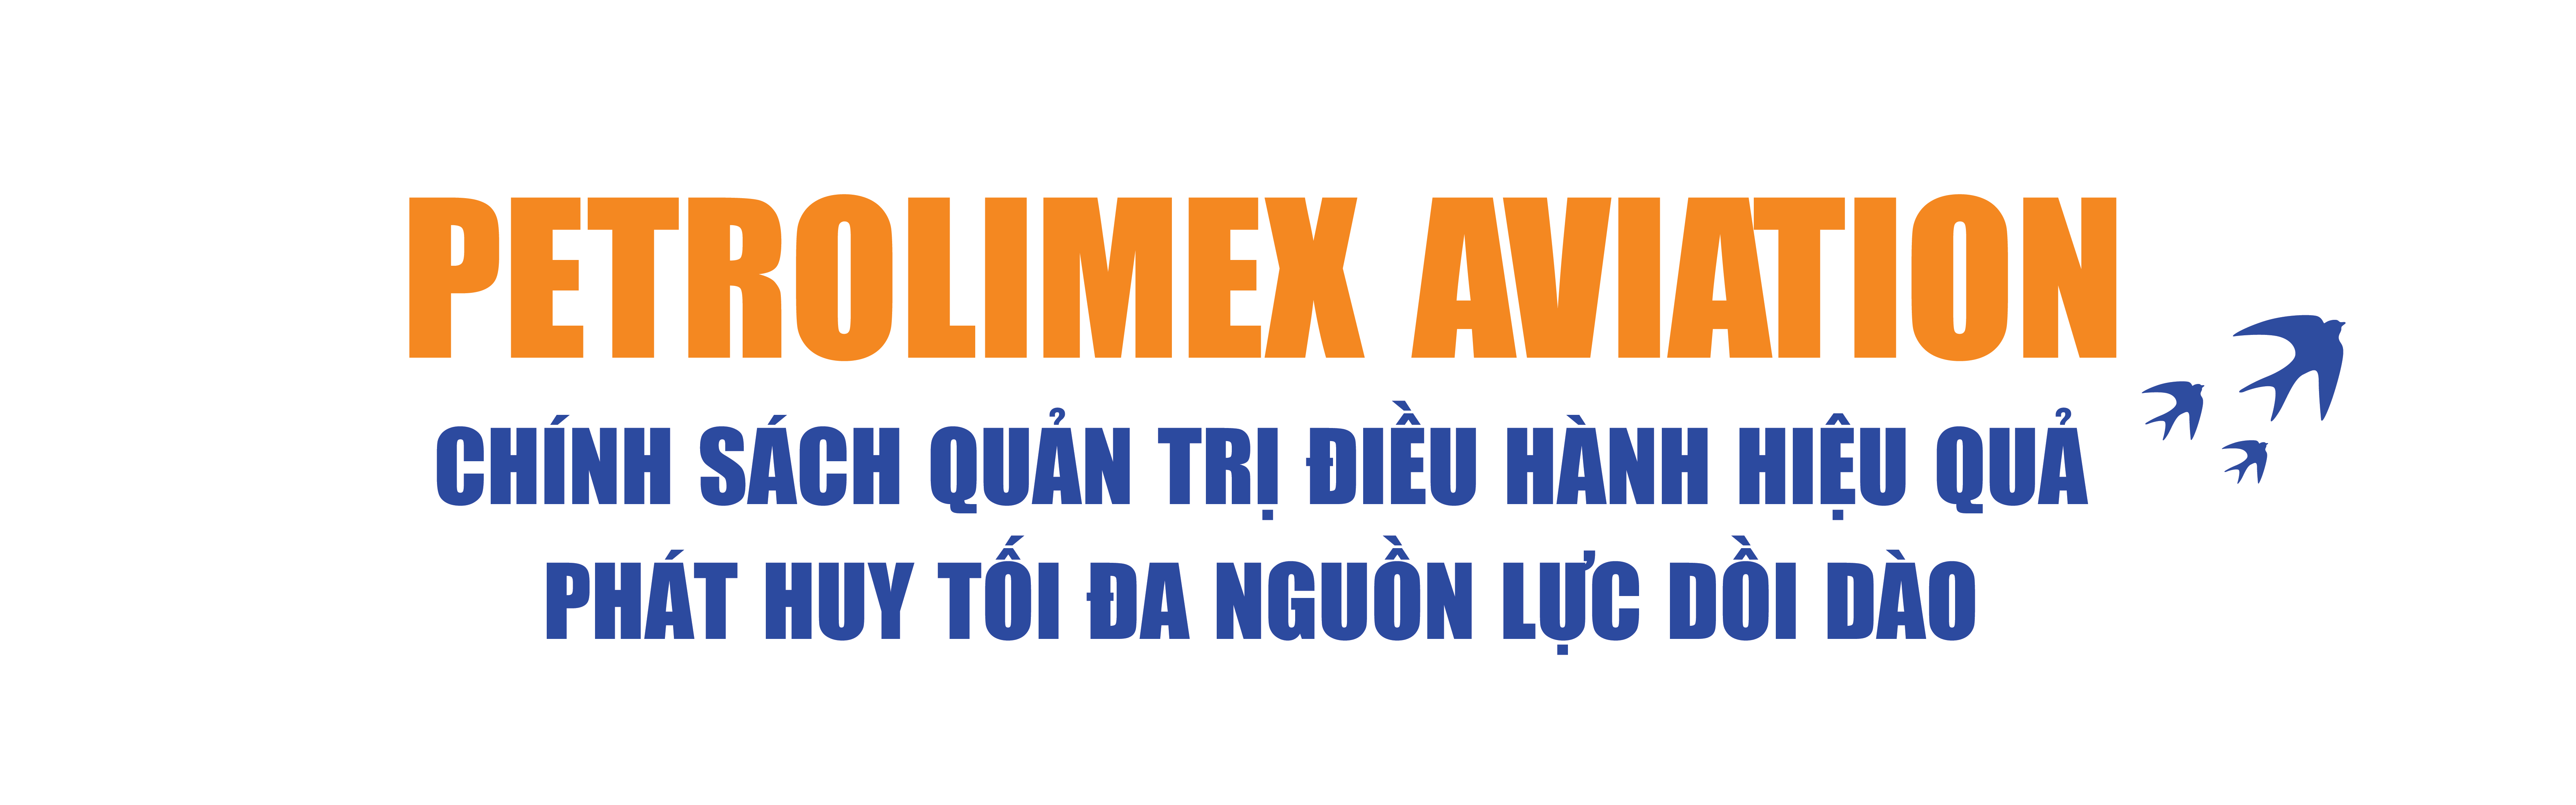 Petrolimex Aviation